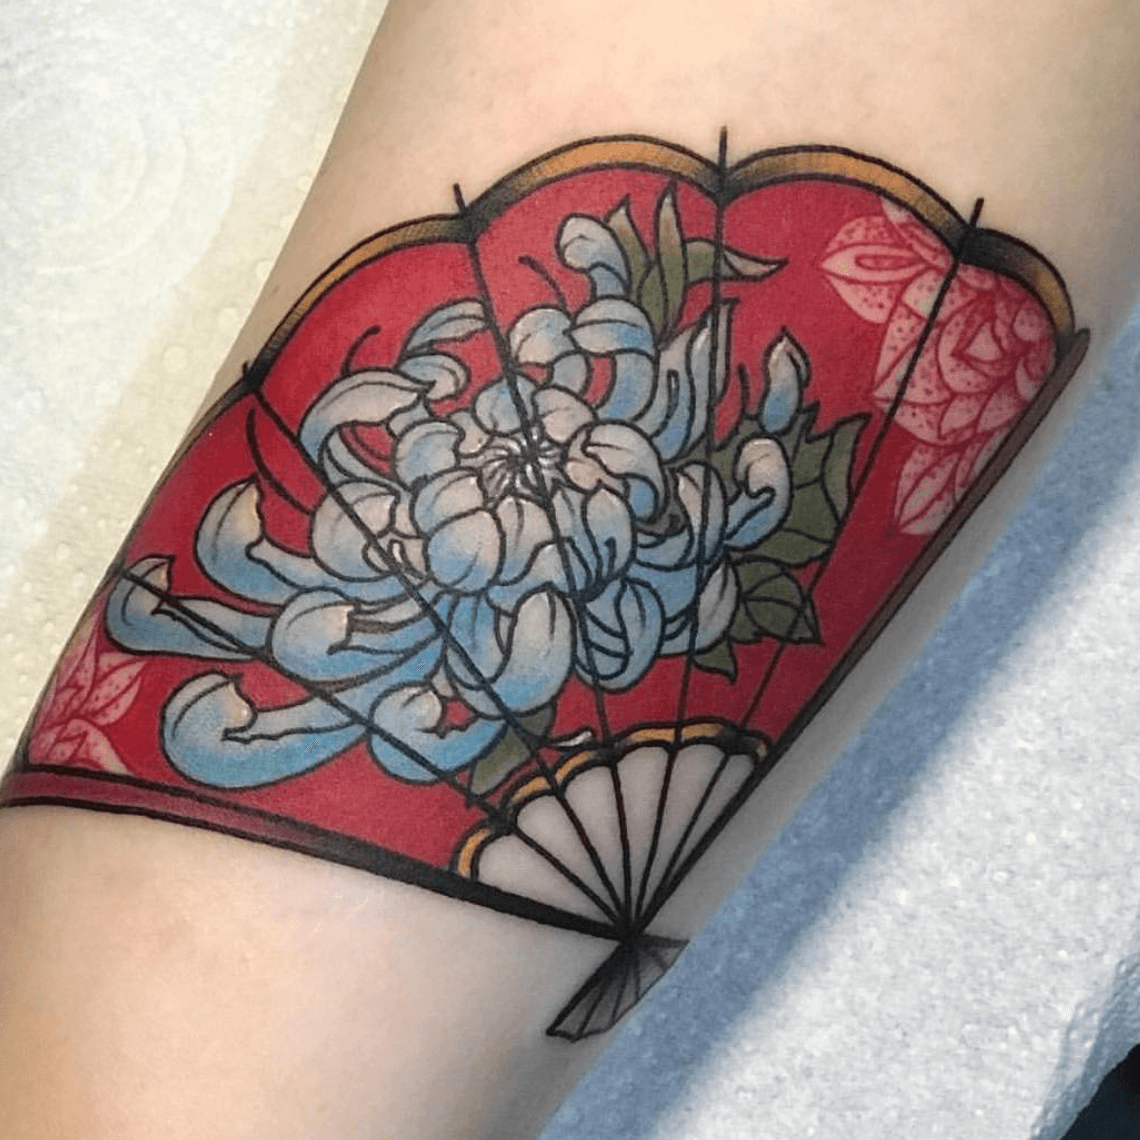 Fan Tattoo Symbol Of Royalty Gracefulness Culture And Femininity